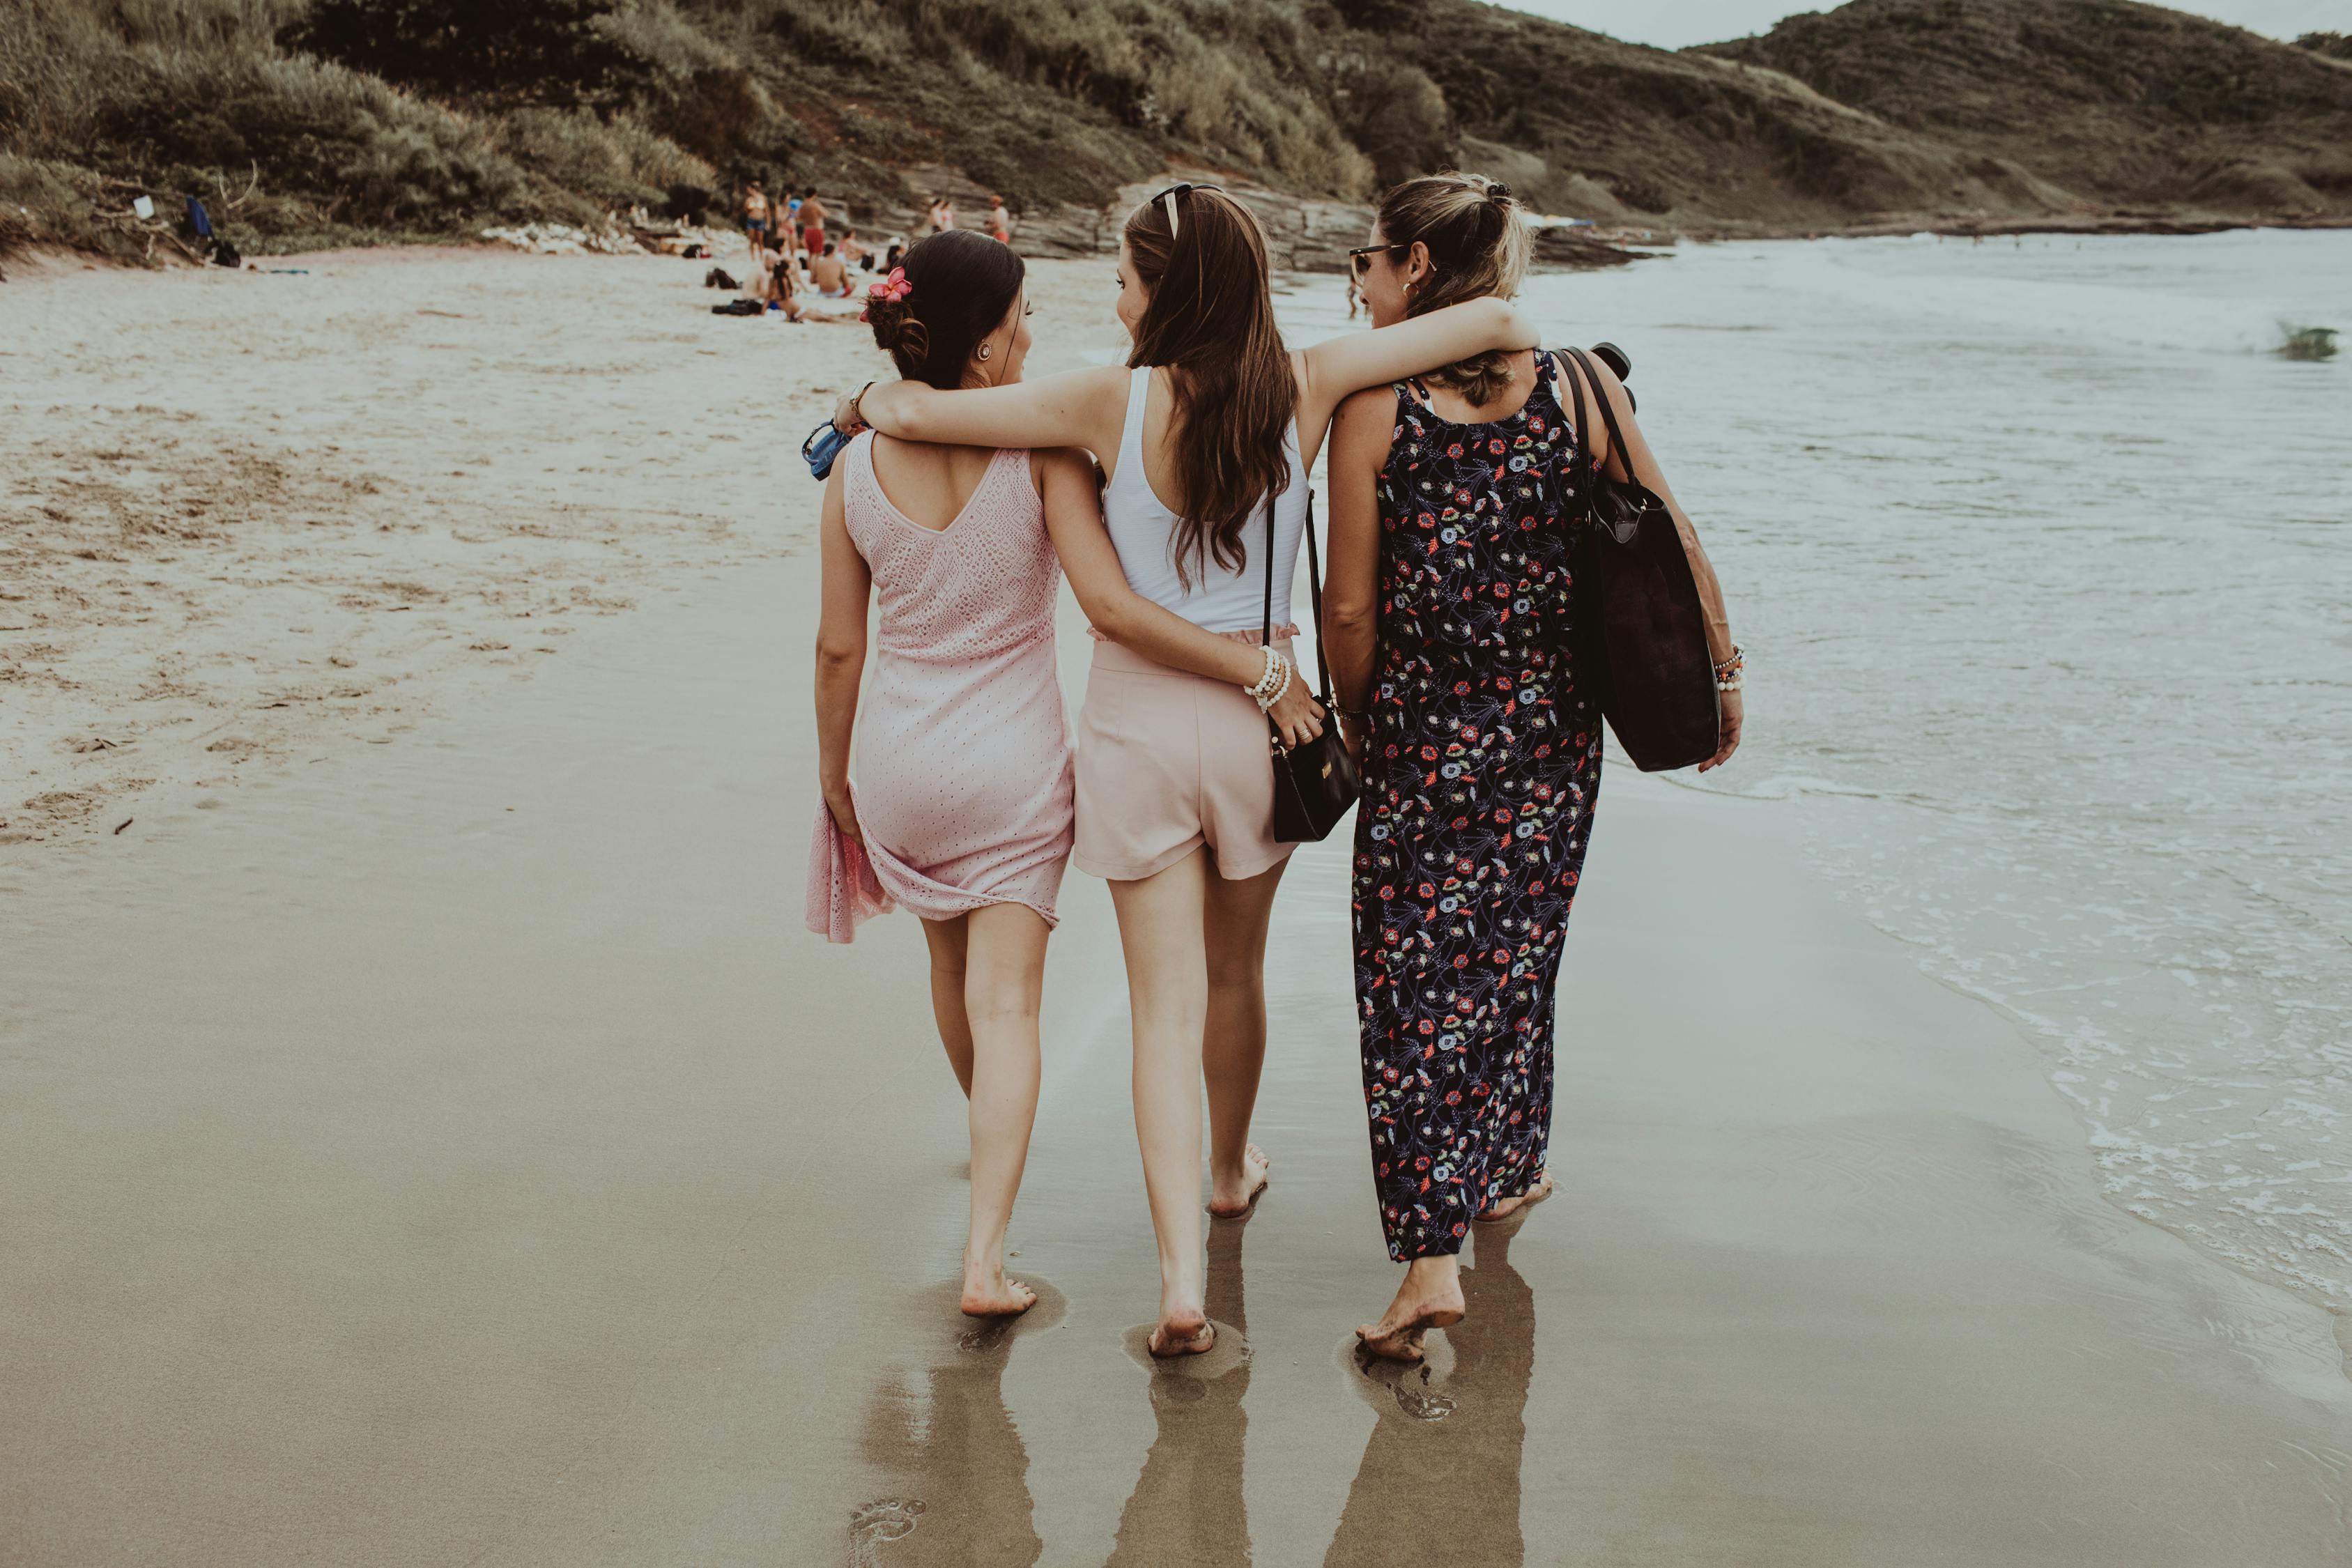 Cheerful girlfriends walking together along sandy beach · Free Stock Photo